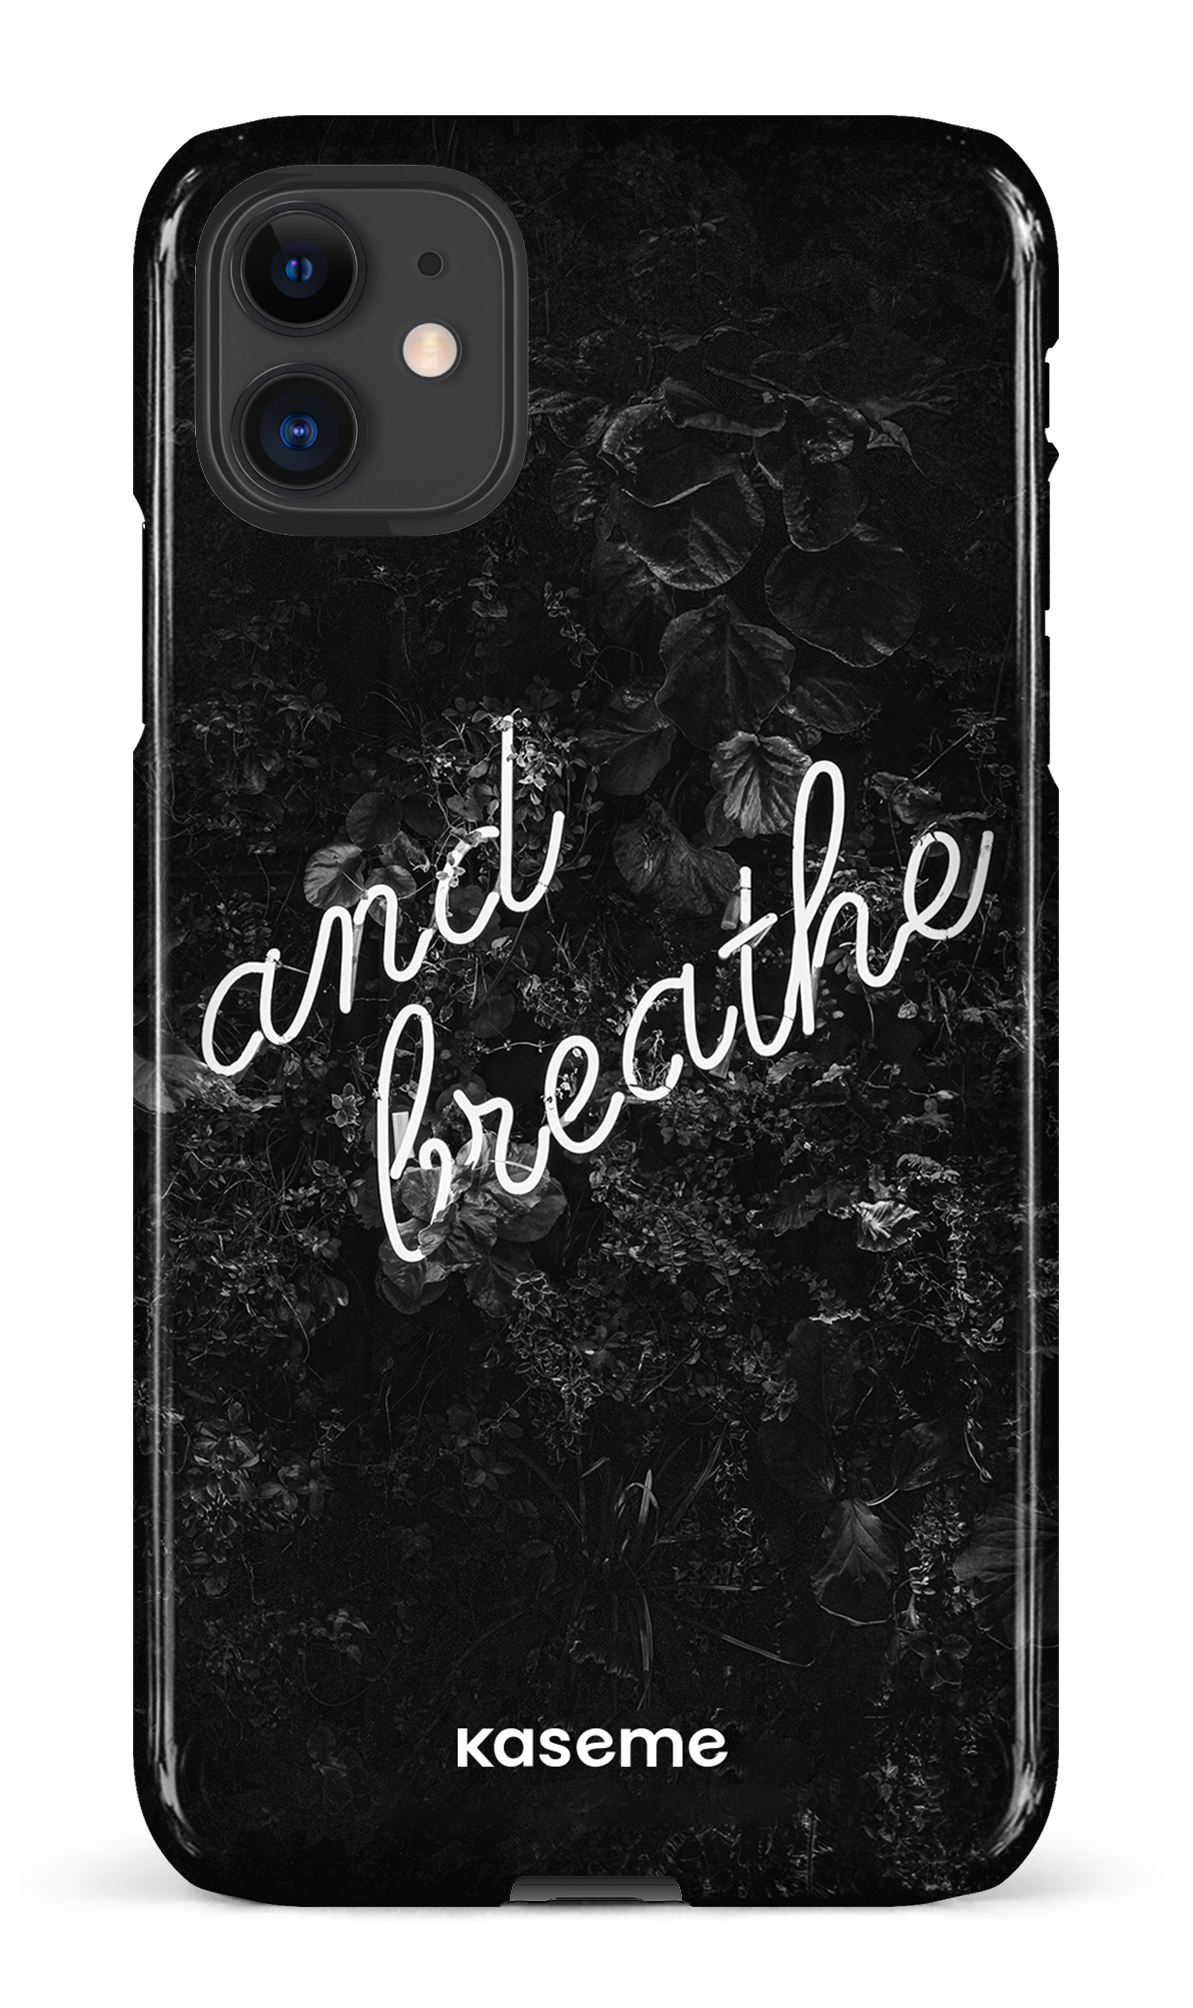 Exhale - iPhone 11